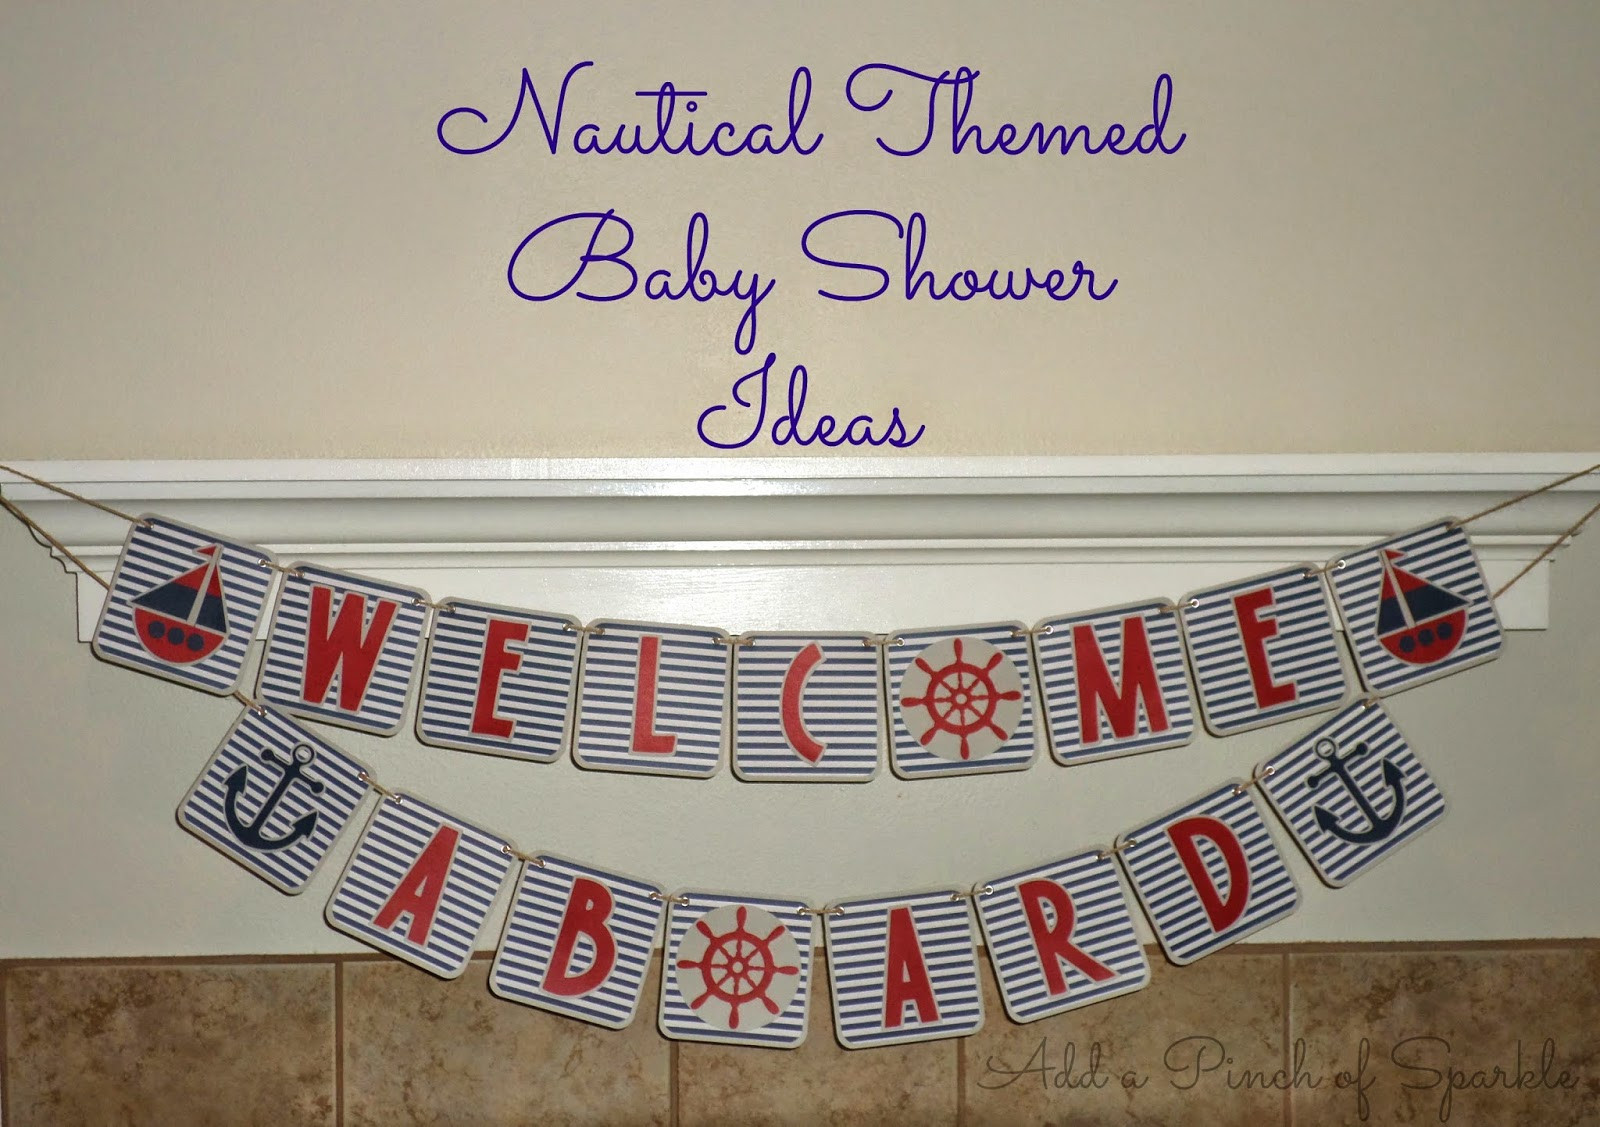 Nautical Theme Baby Shower Decor
 Add A Pinch Sparkle Nautical Themed Baby Shower Ideas